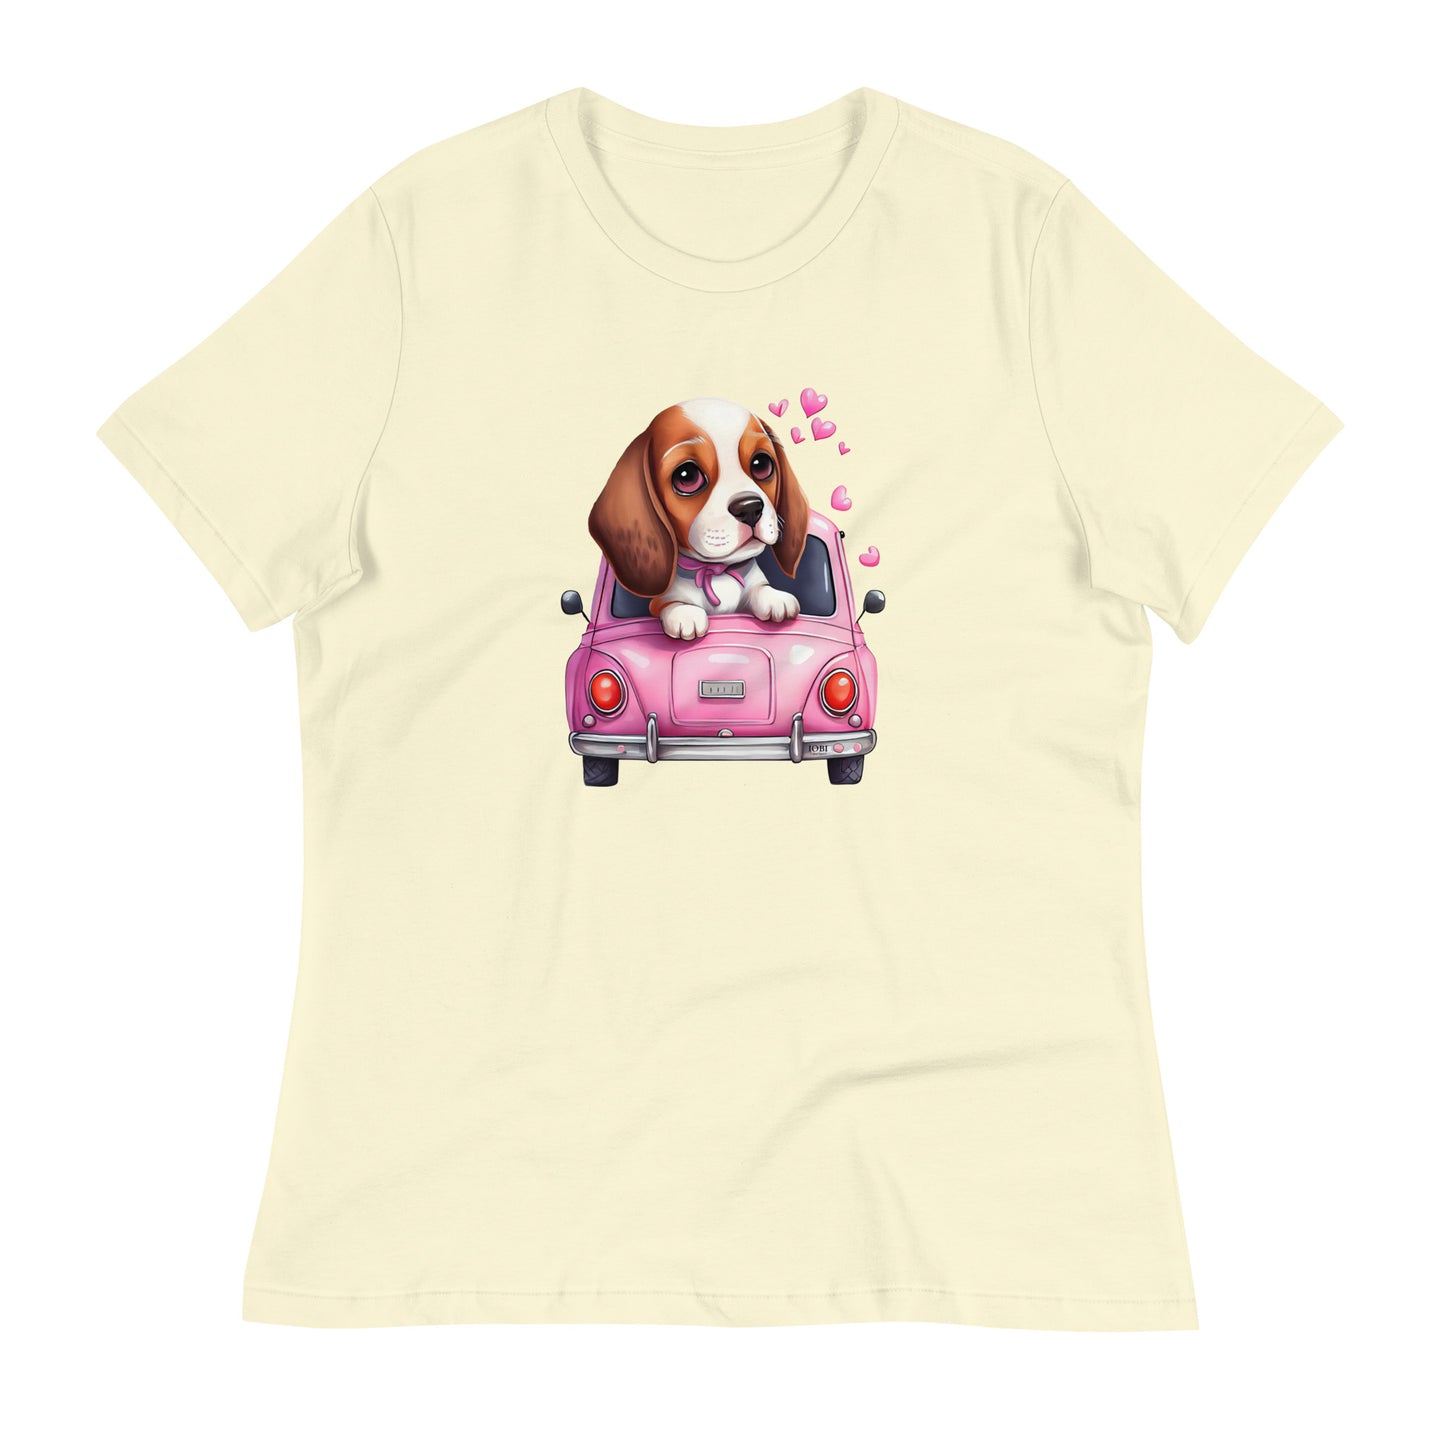 Women's Relaxed Soft & Smooth Premium Quality T-Shirt My Beagle Design by IOBI Original Apparel